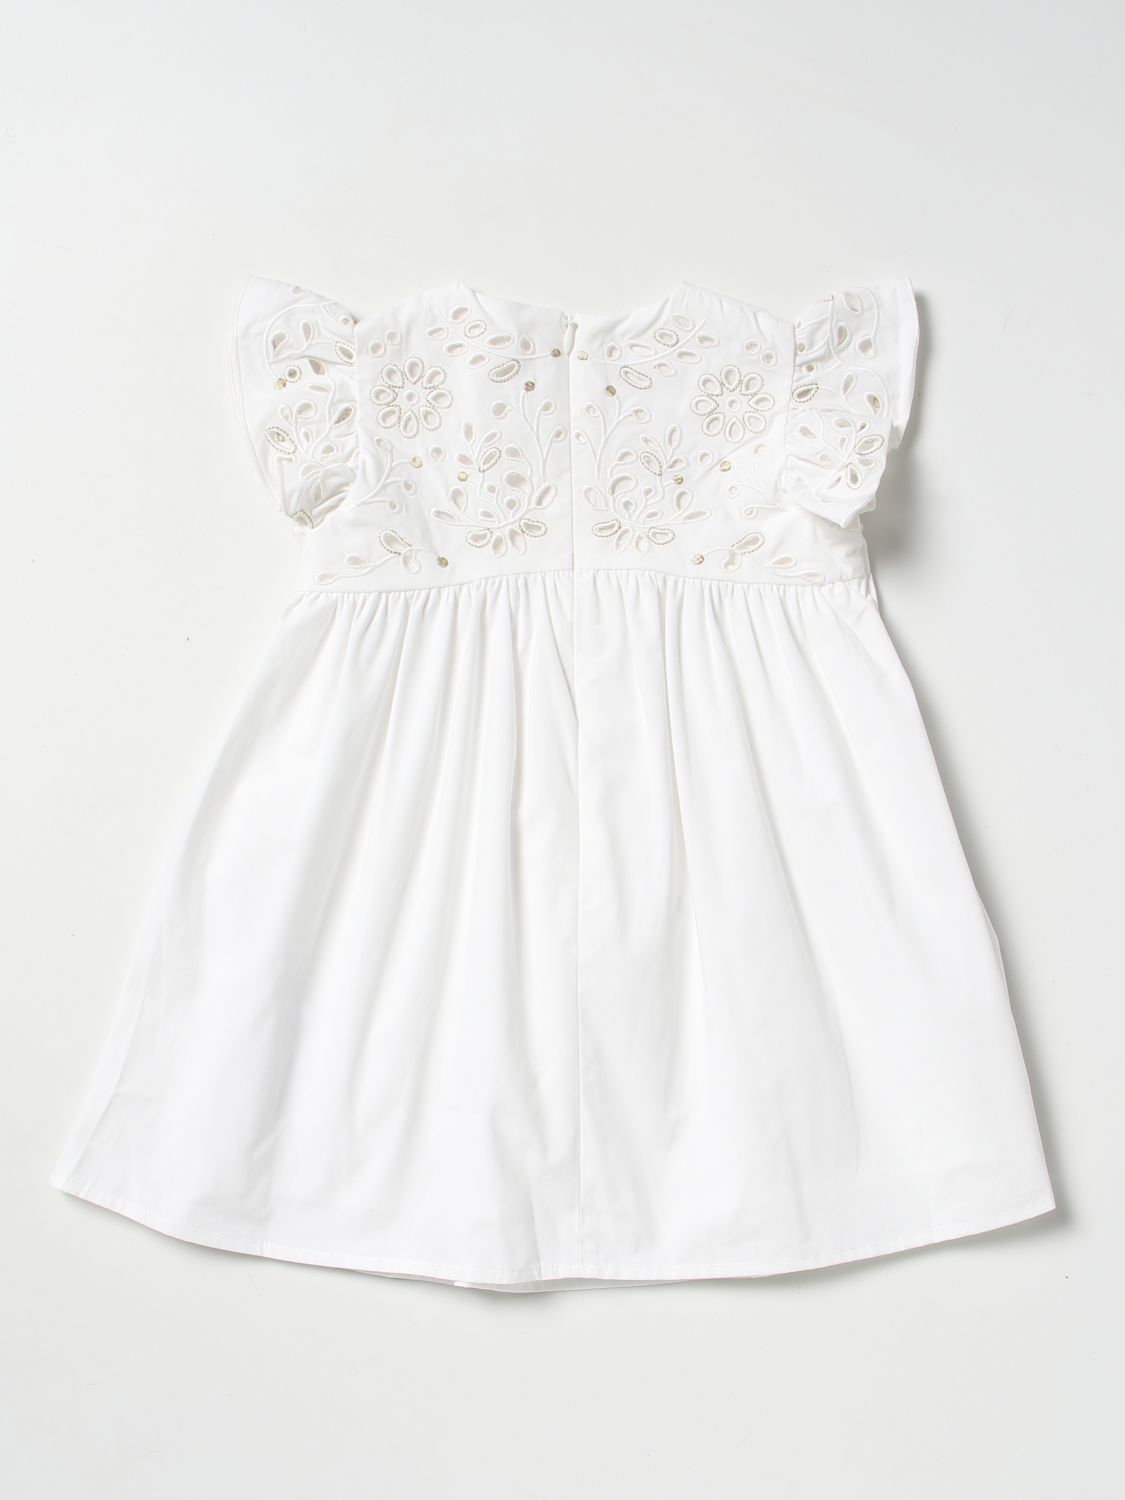 CHLOÉ: dress for girls - White | Chloé dress C02340 online on GIGLIO.COM